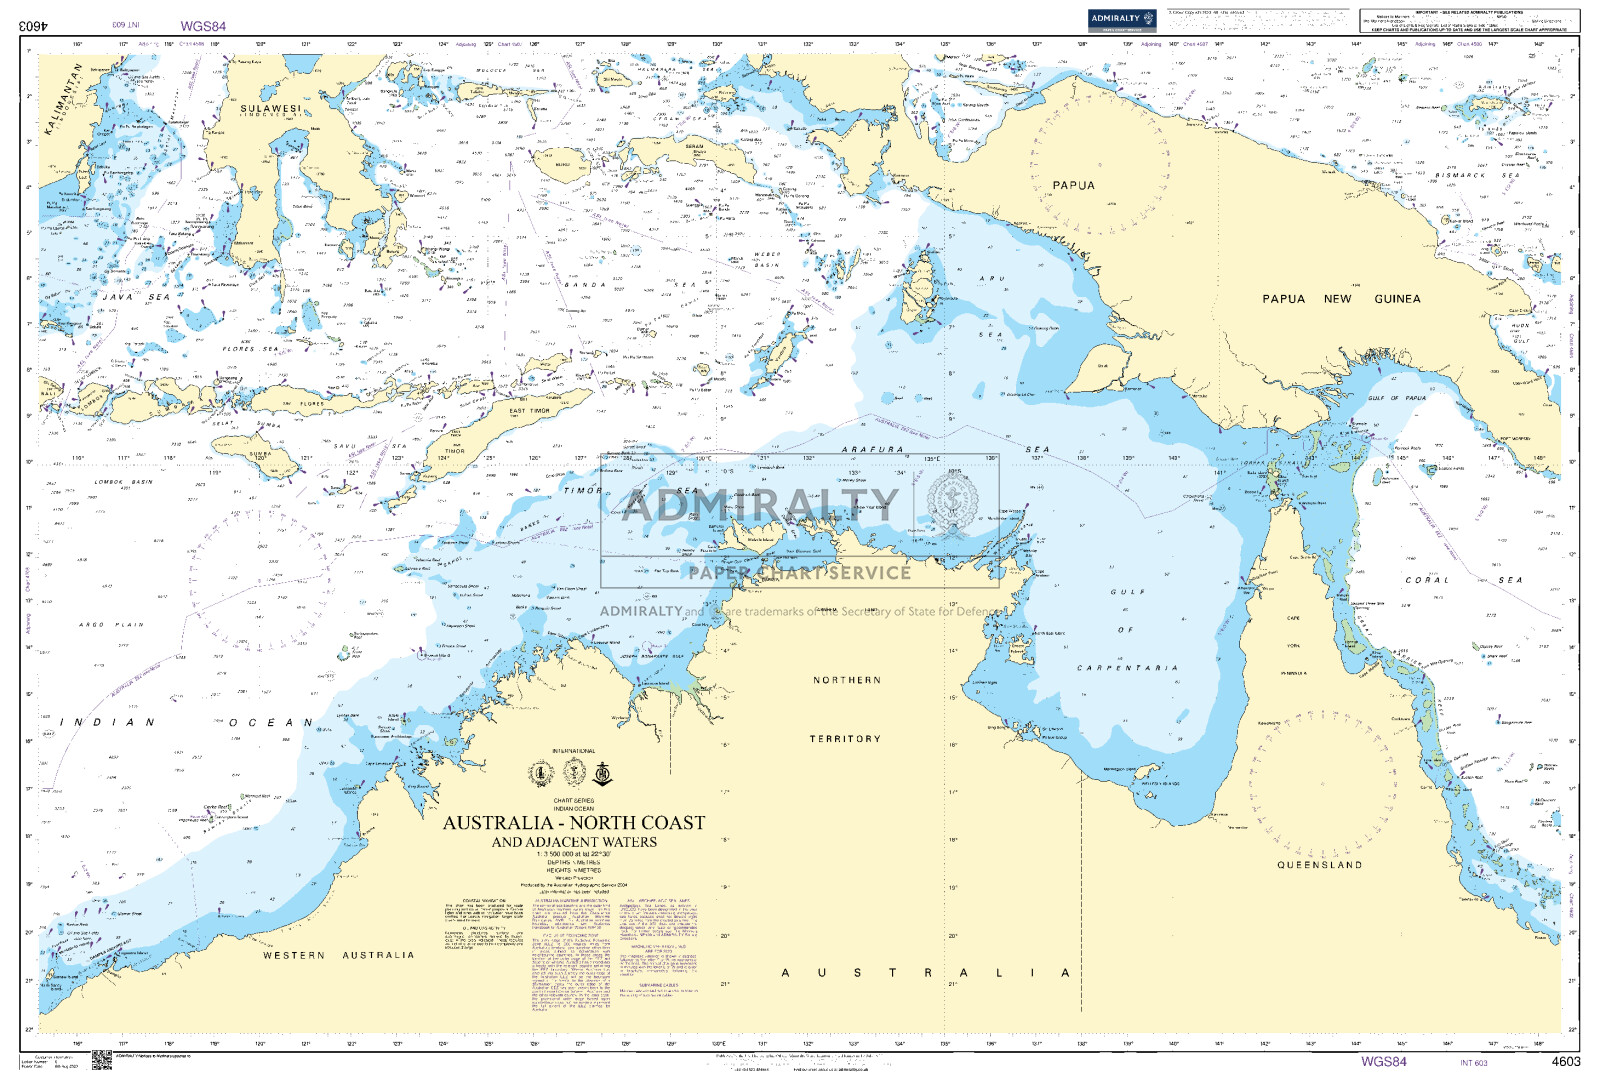 Australia - North Coast and Adjacent Waters. UKHO4603